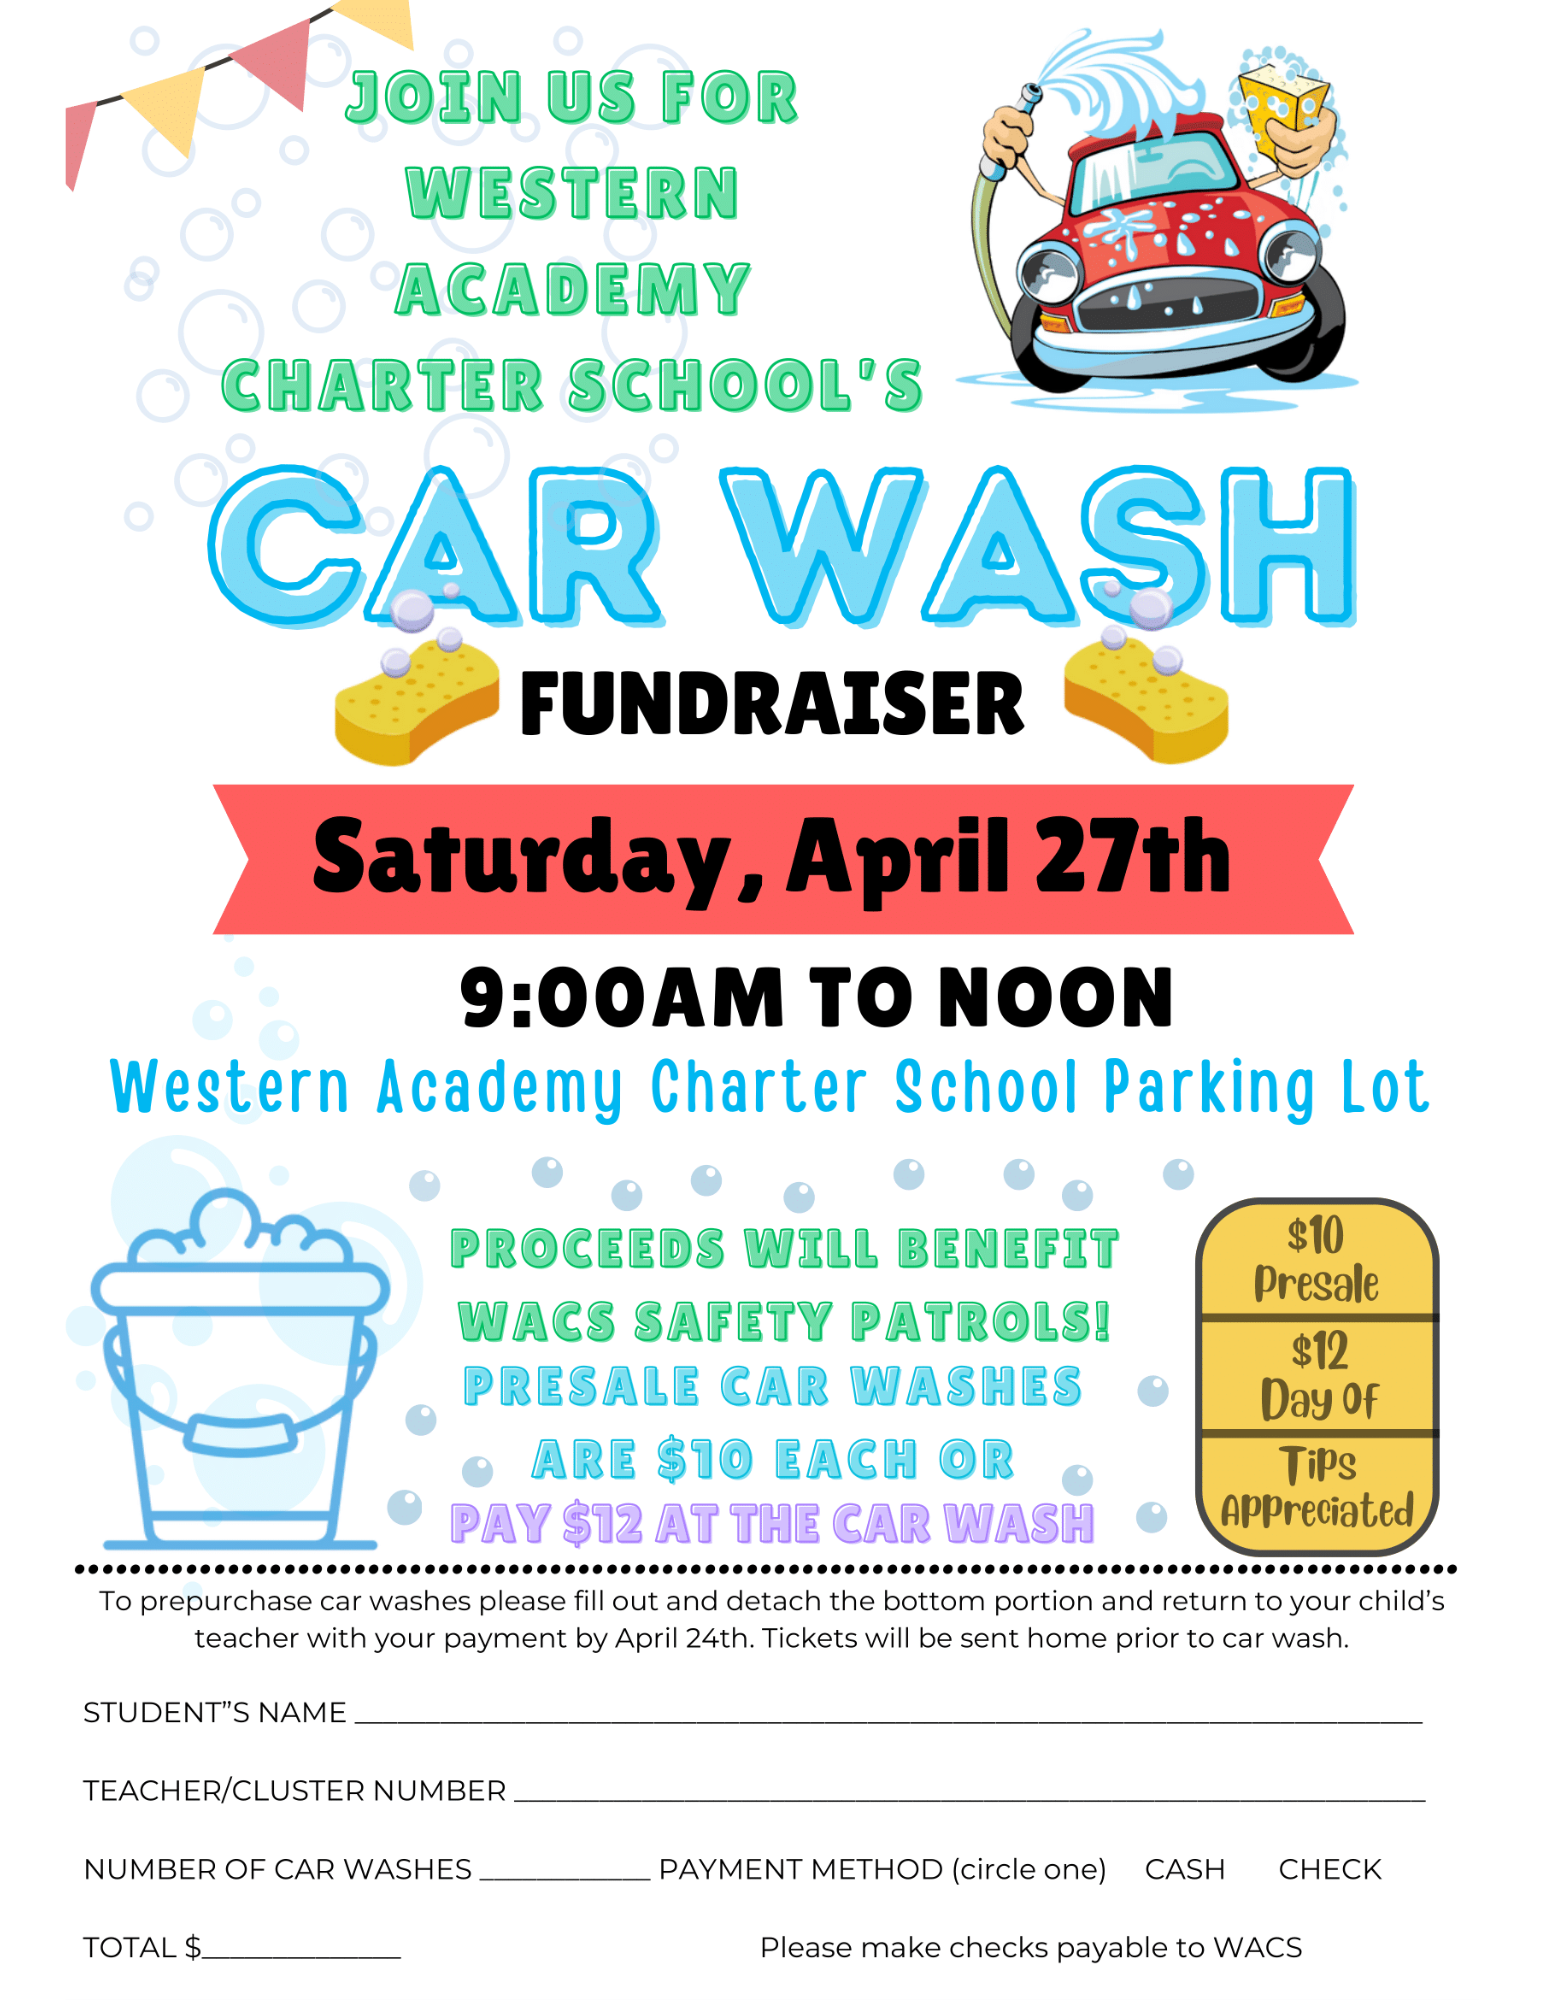 WACS Car Wash Fundraiser